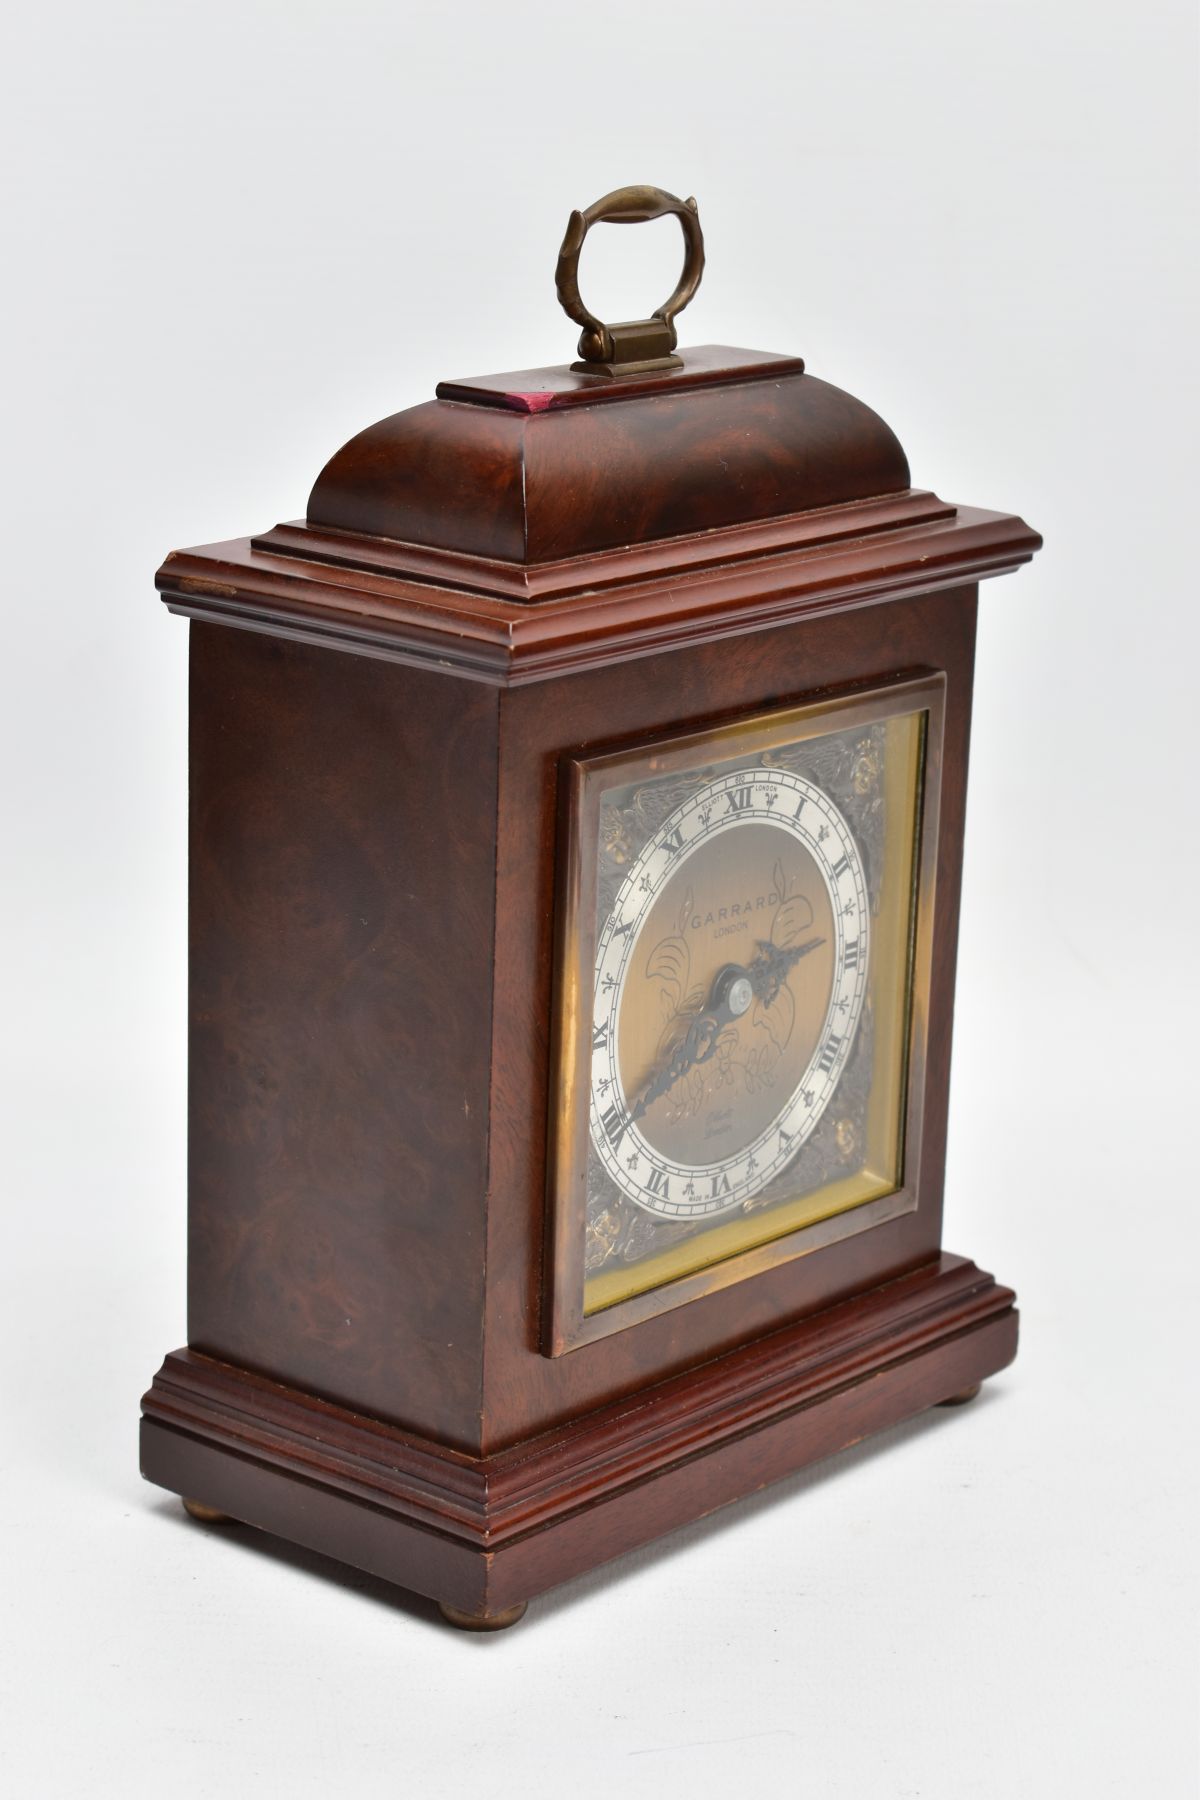 A BURR WOOD CASED GARRARD MANTLE CLOCK, London Elliott mantel clock the silvered ring set with Roman - Image 3 of 6